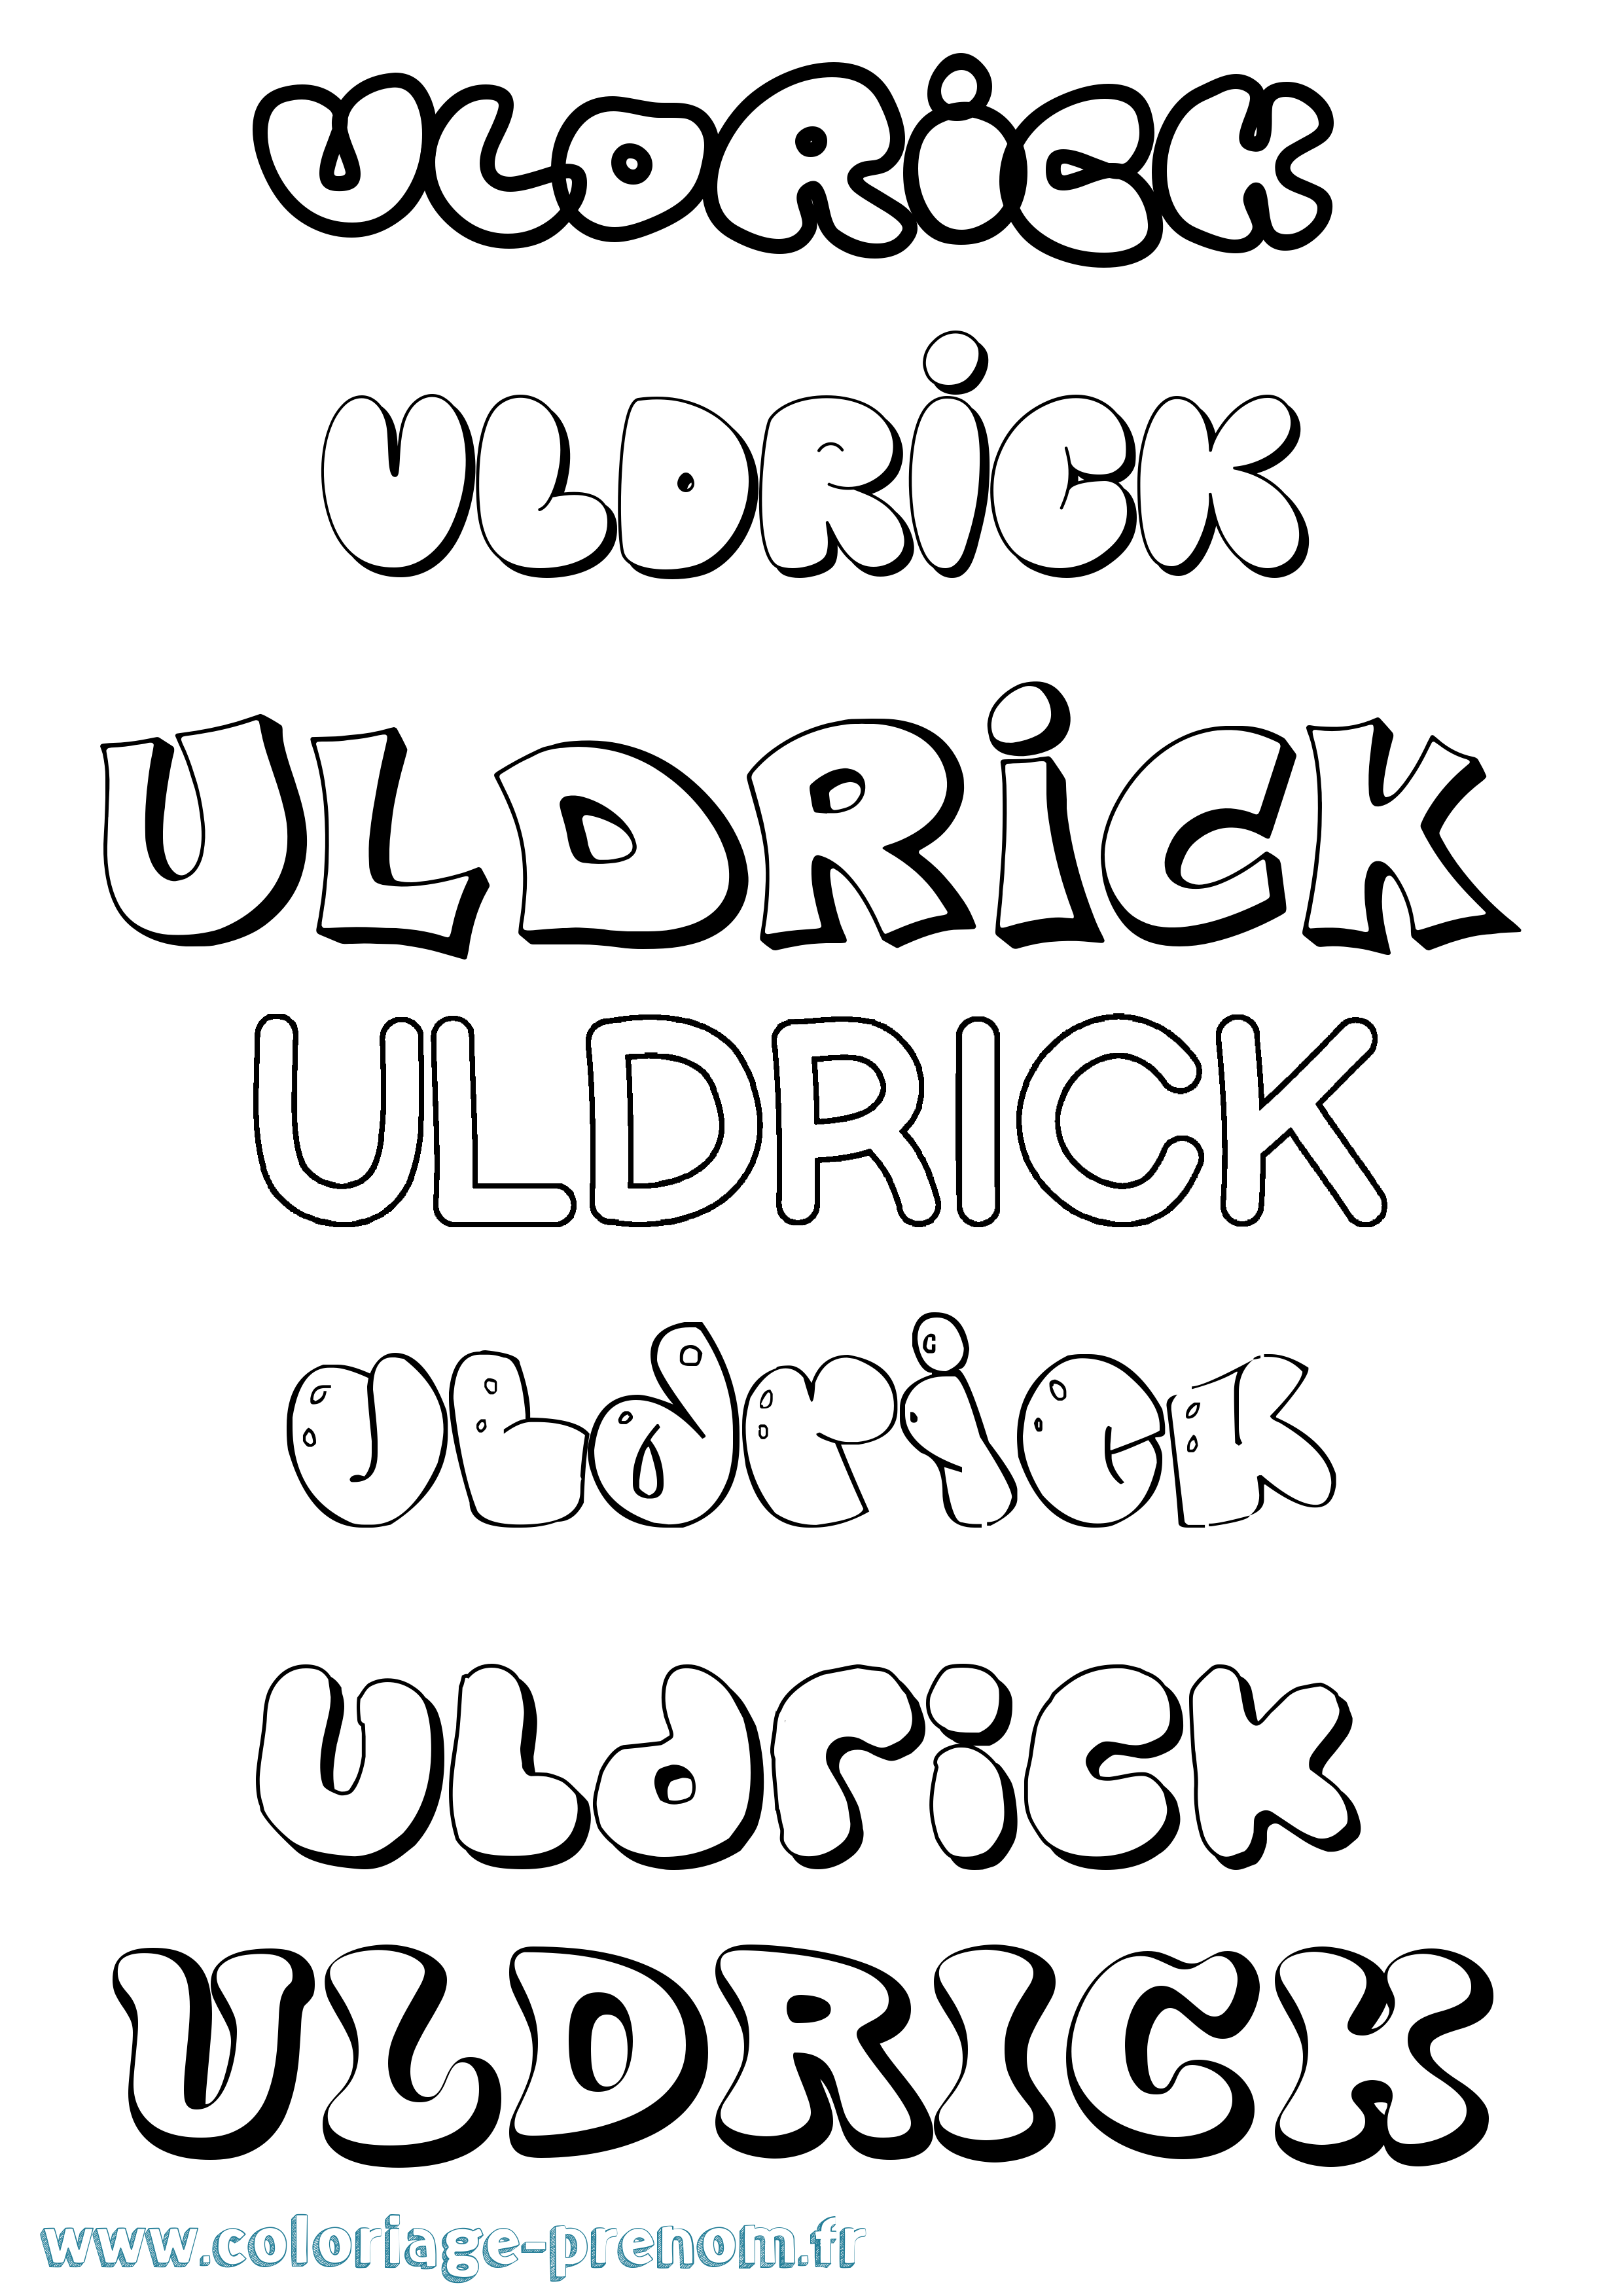 Coloriage prénom Uldrick Bubble